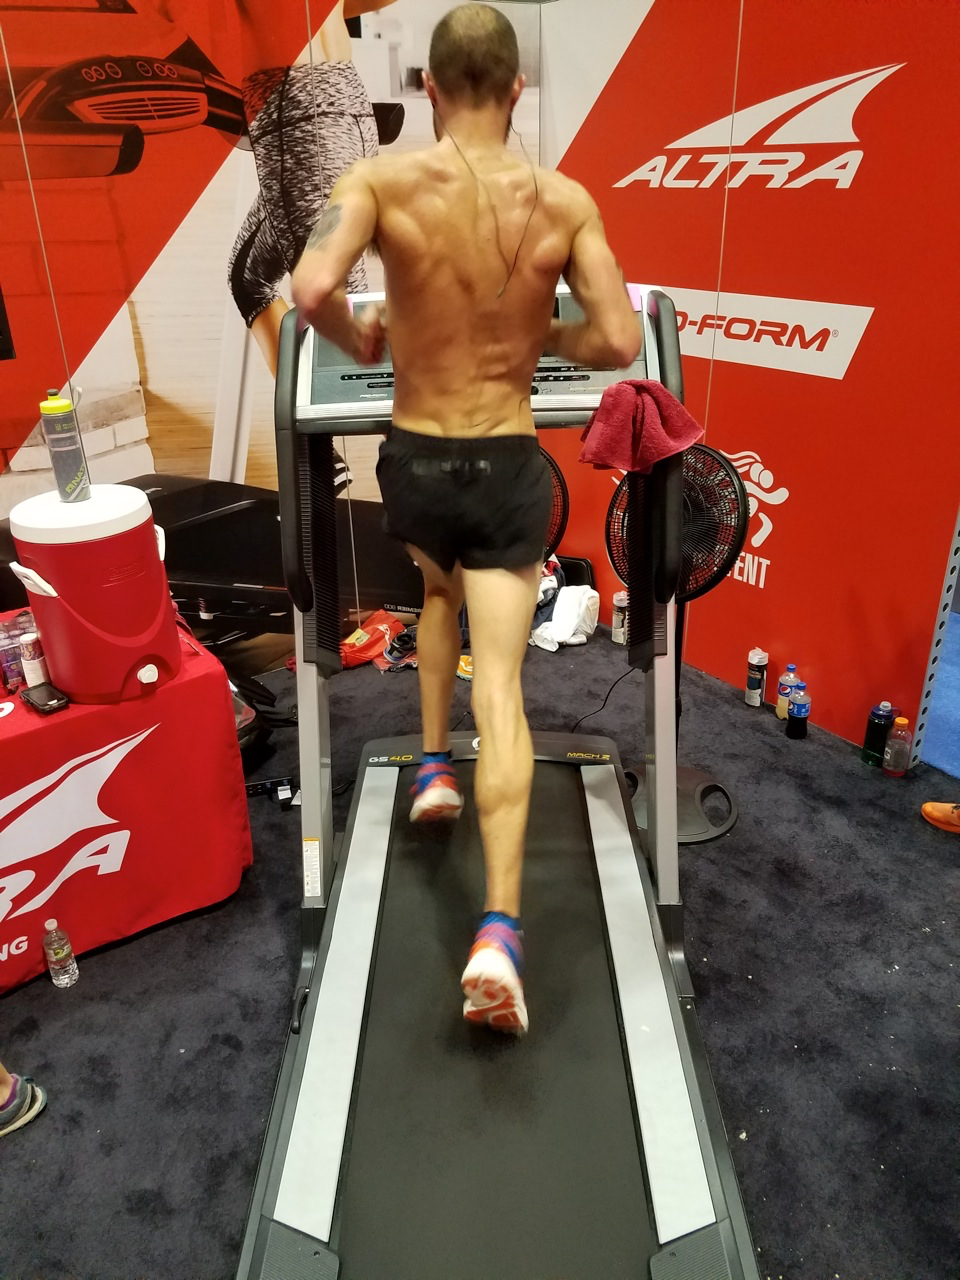 Jacob Puzey breaking the 50 mile treadmill record